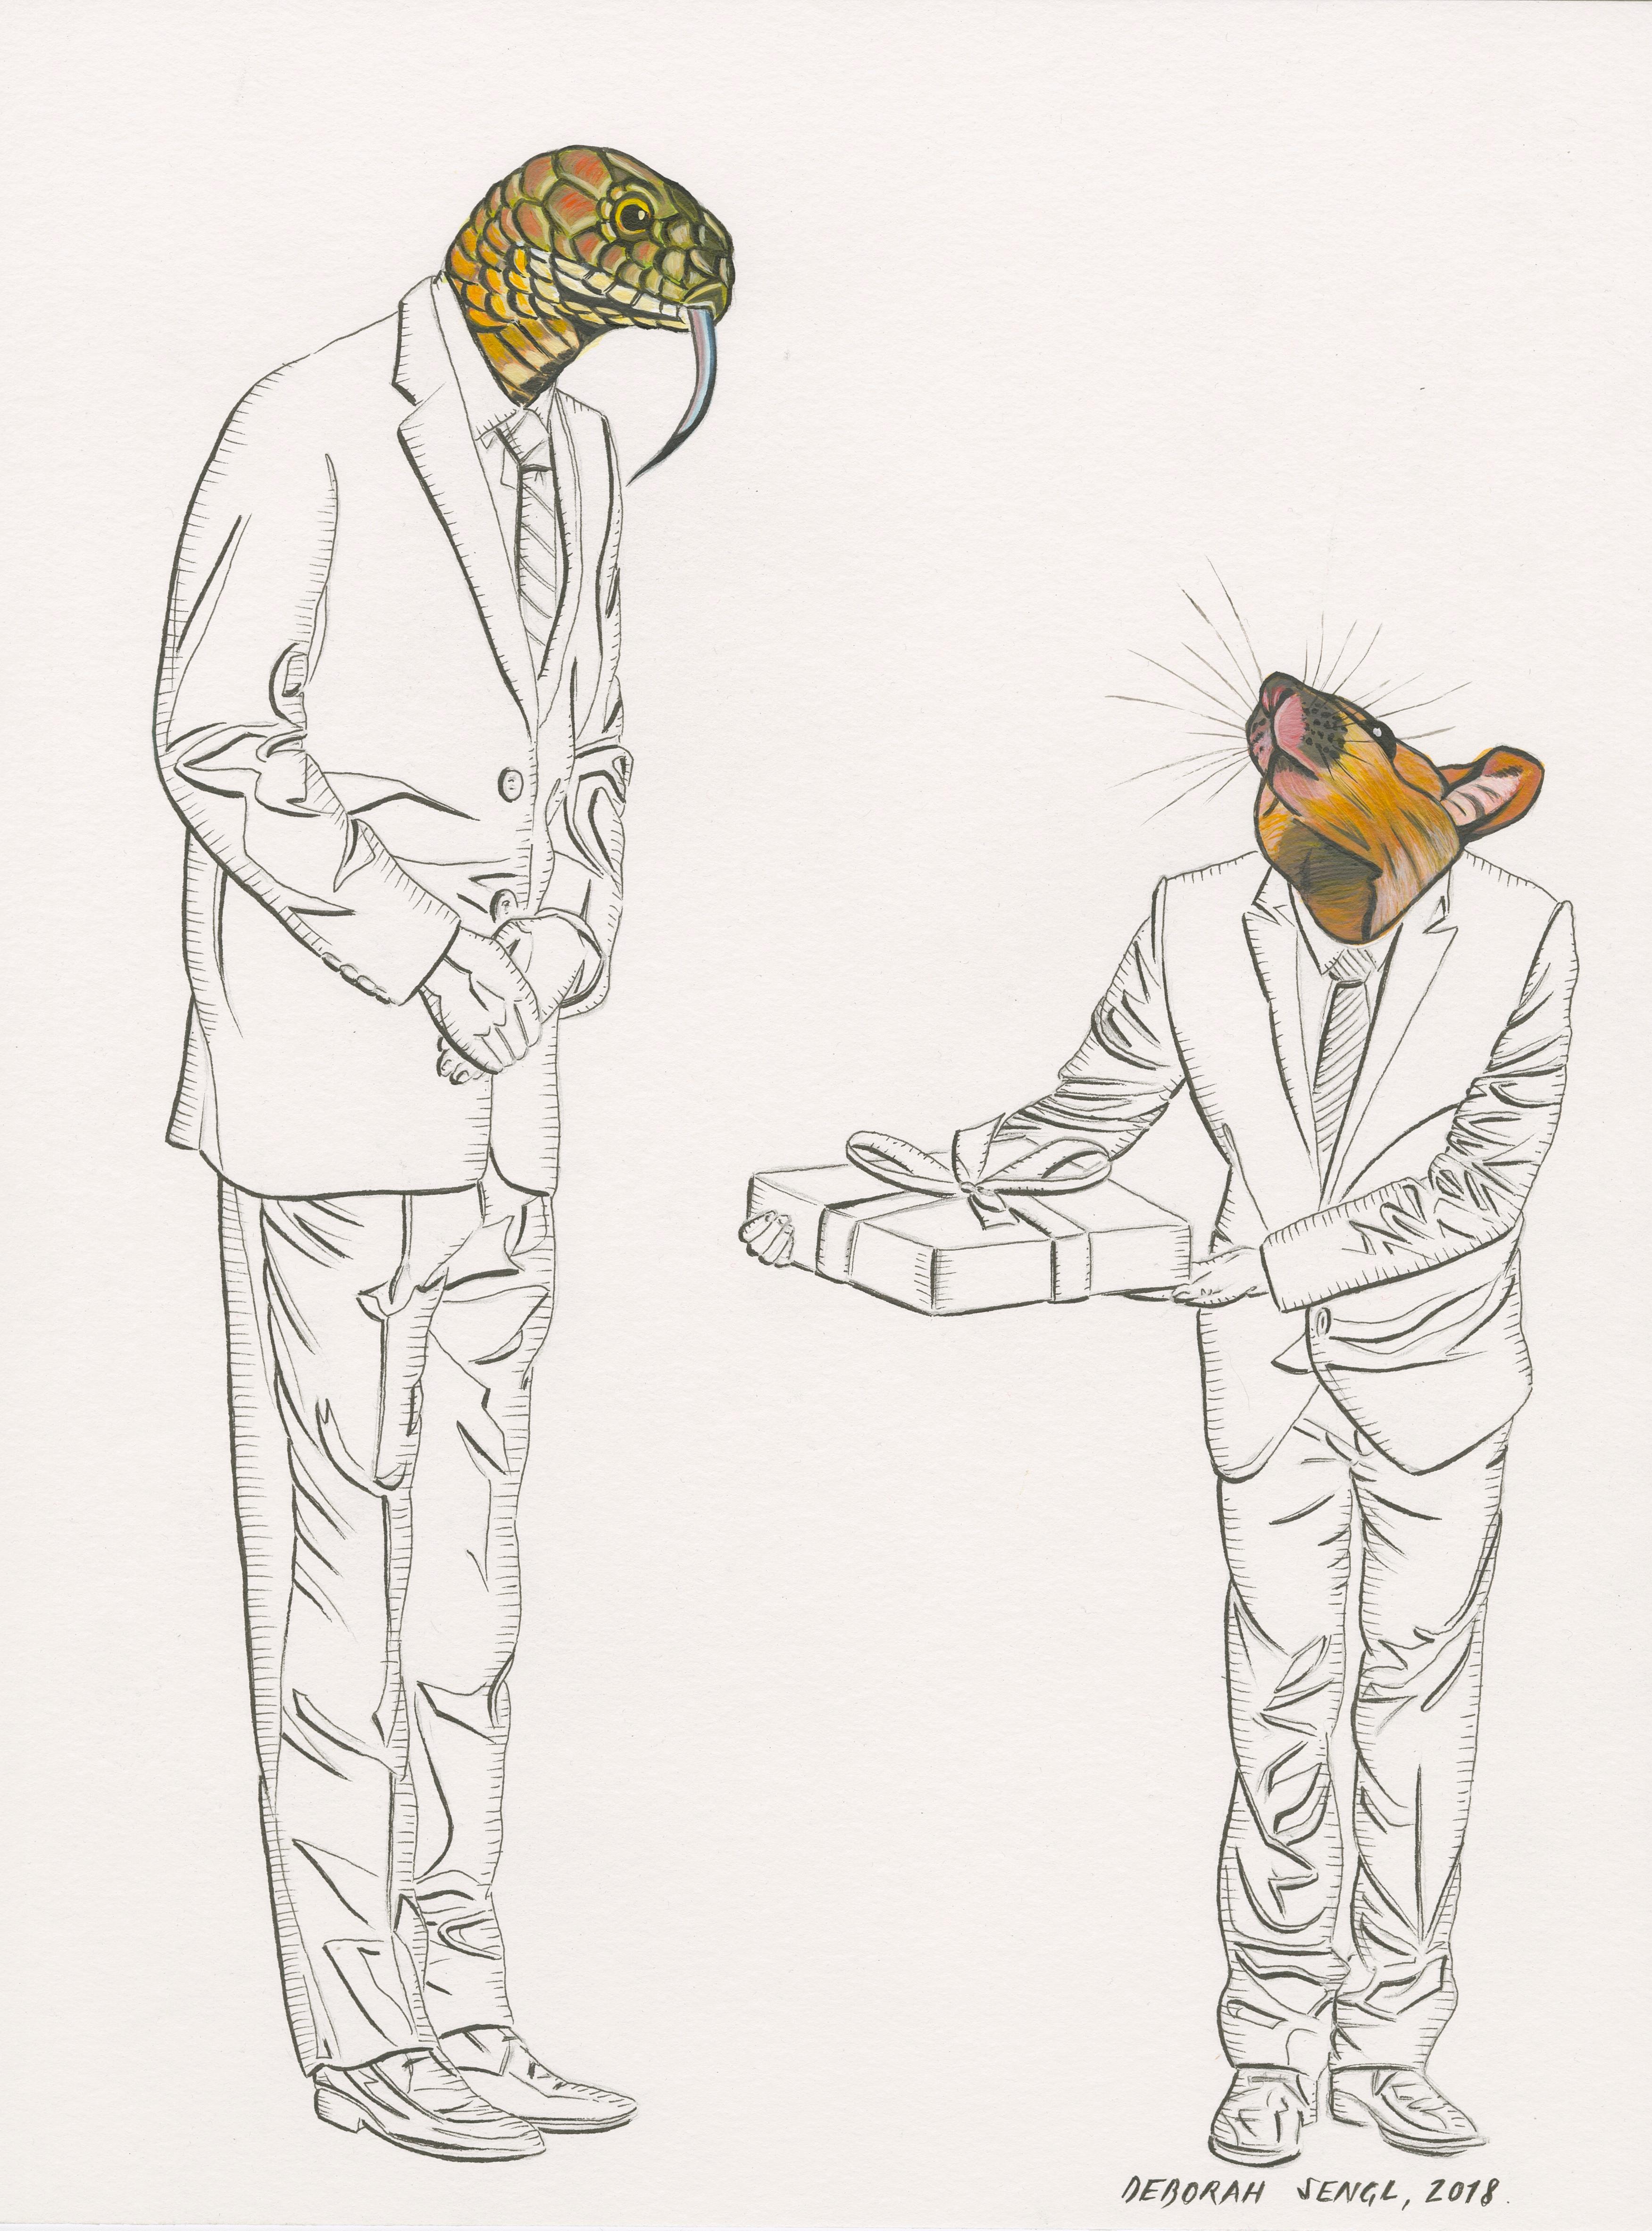 Deborah Sengl Animal Art - On Human Relations - Contemporary Animal Drawing